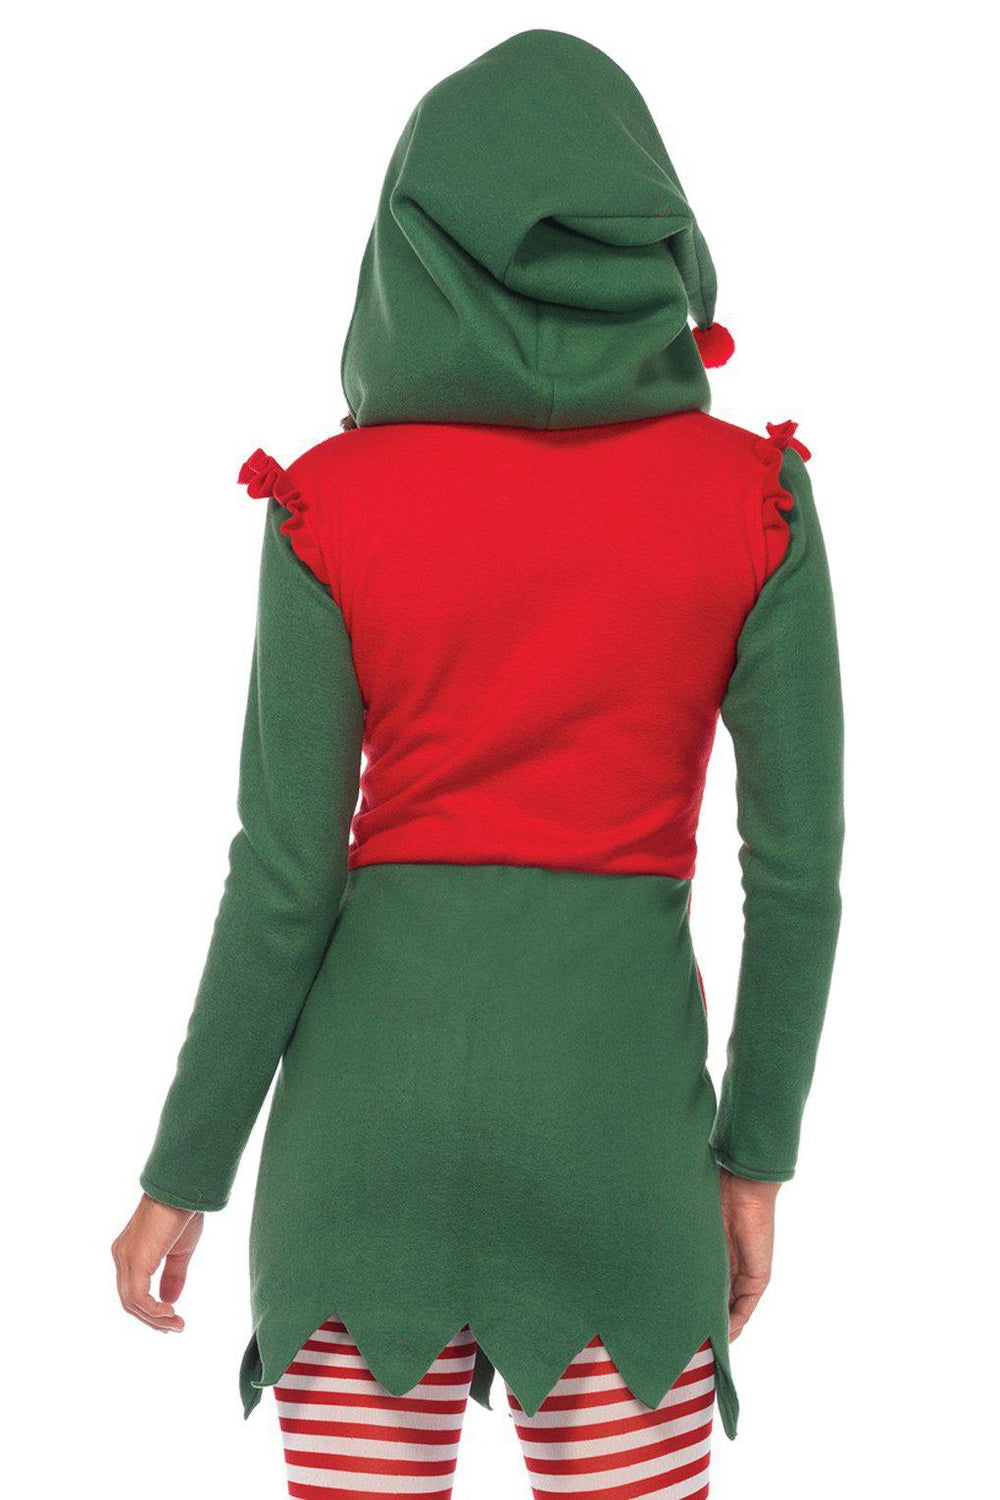 Sexy Elf Costume Dress-Holiday Costumes-Leg Avenue-SEXYSHOES.COM